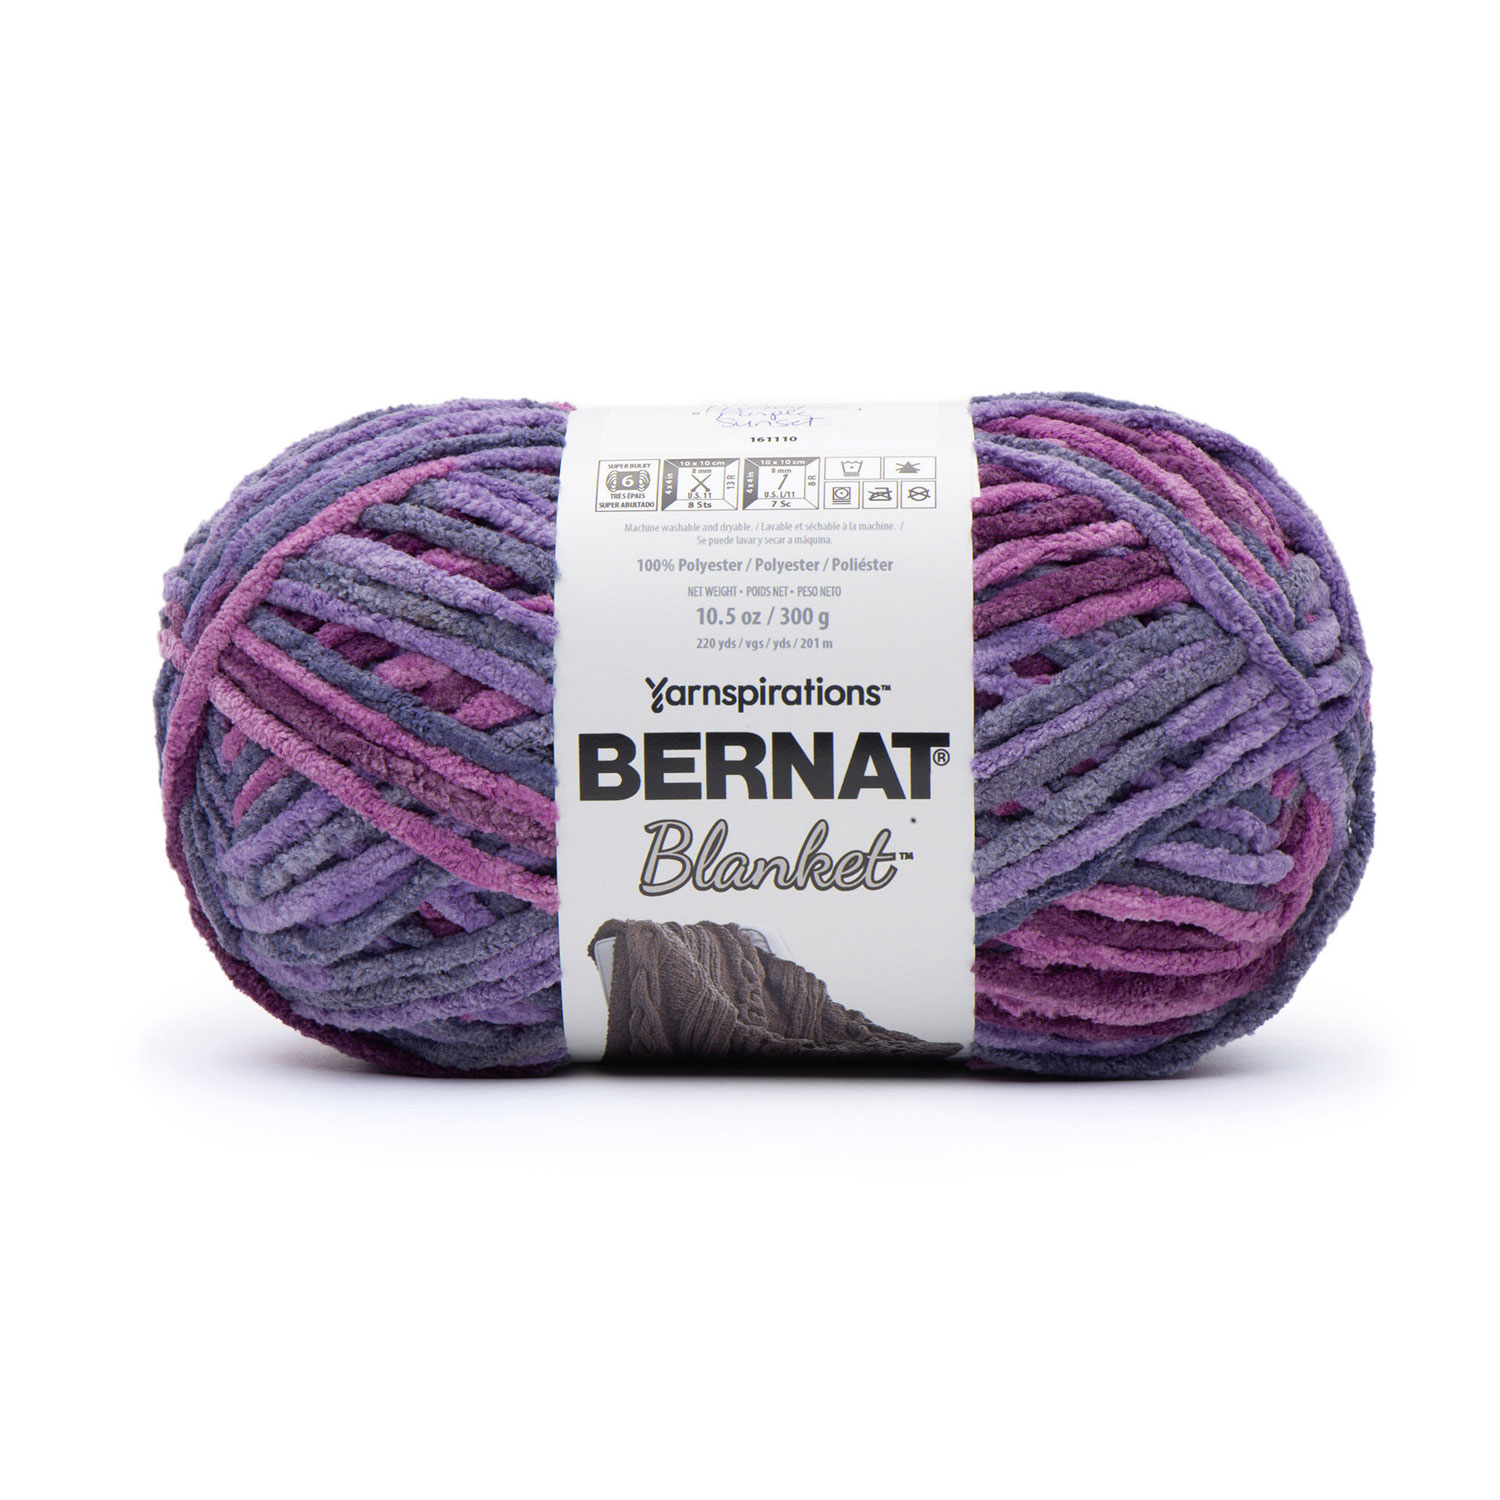 Bernat Blanket - Yarn, purple sunset